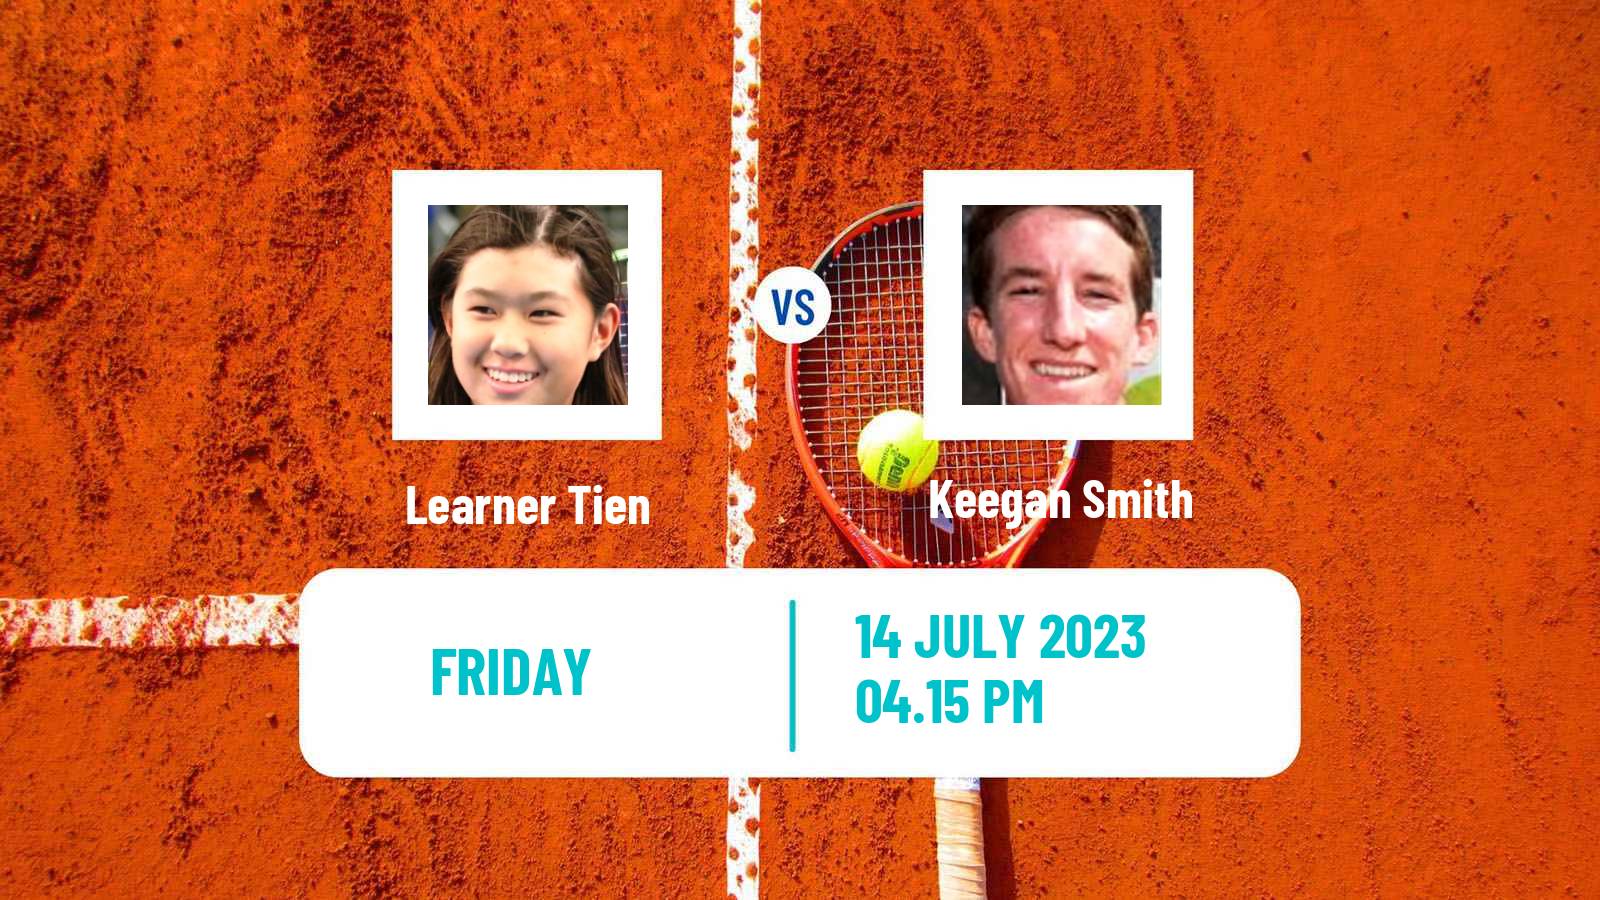 Tennis ITF M15 Lakewood Ca 2 Men Learner Tien - Keegan Smith